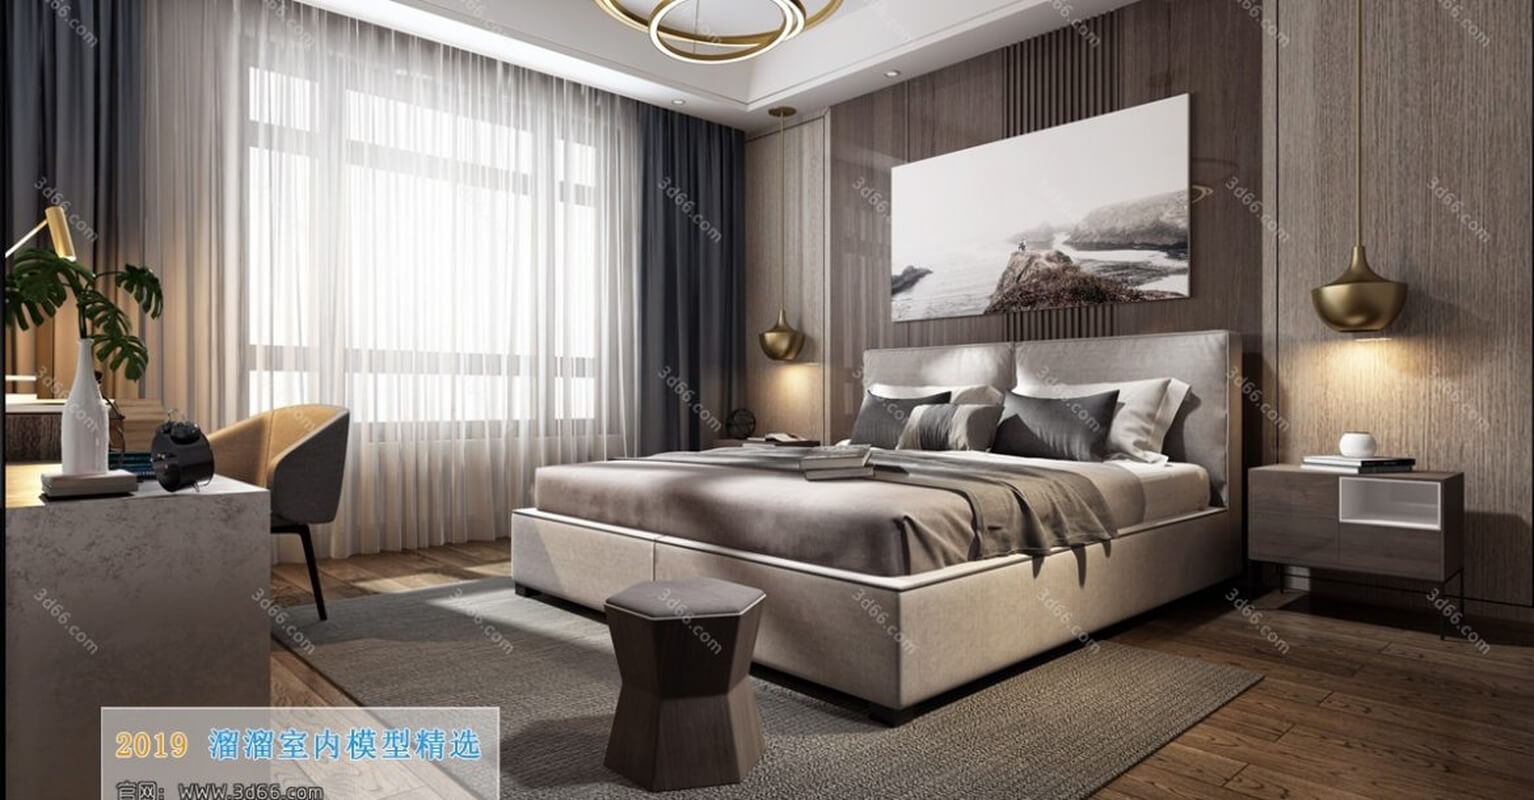 3D66 Bedroom Interior 2019 Style (06)